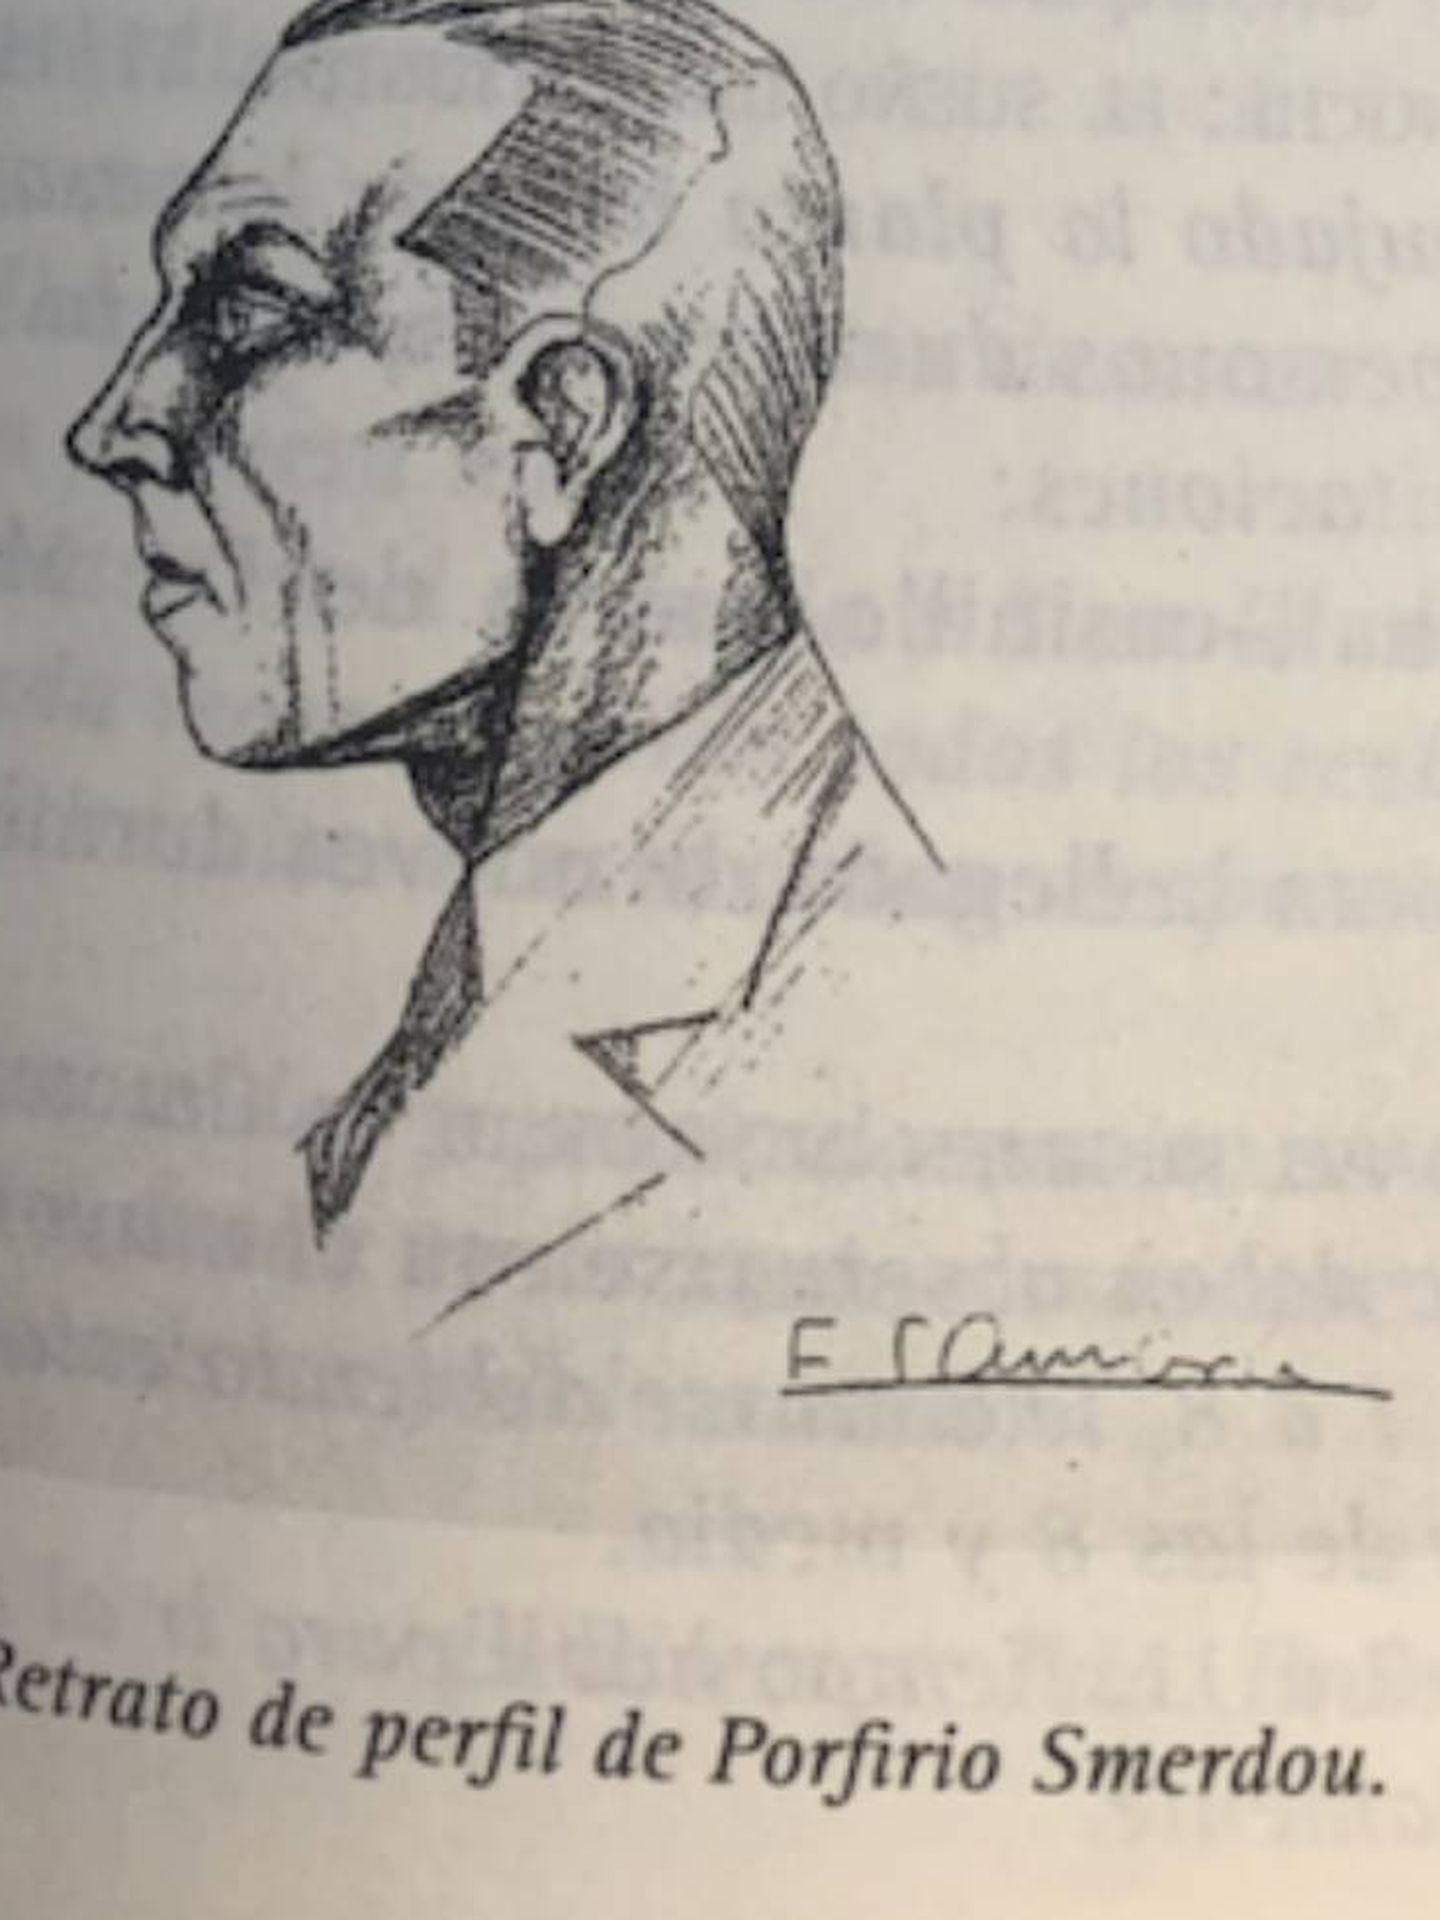 Dibujo de Porfirio Smerdou que aparece en el libro de Félix Álvarez.